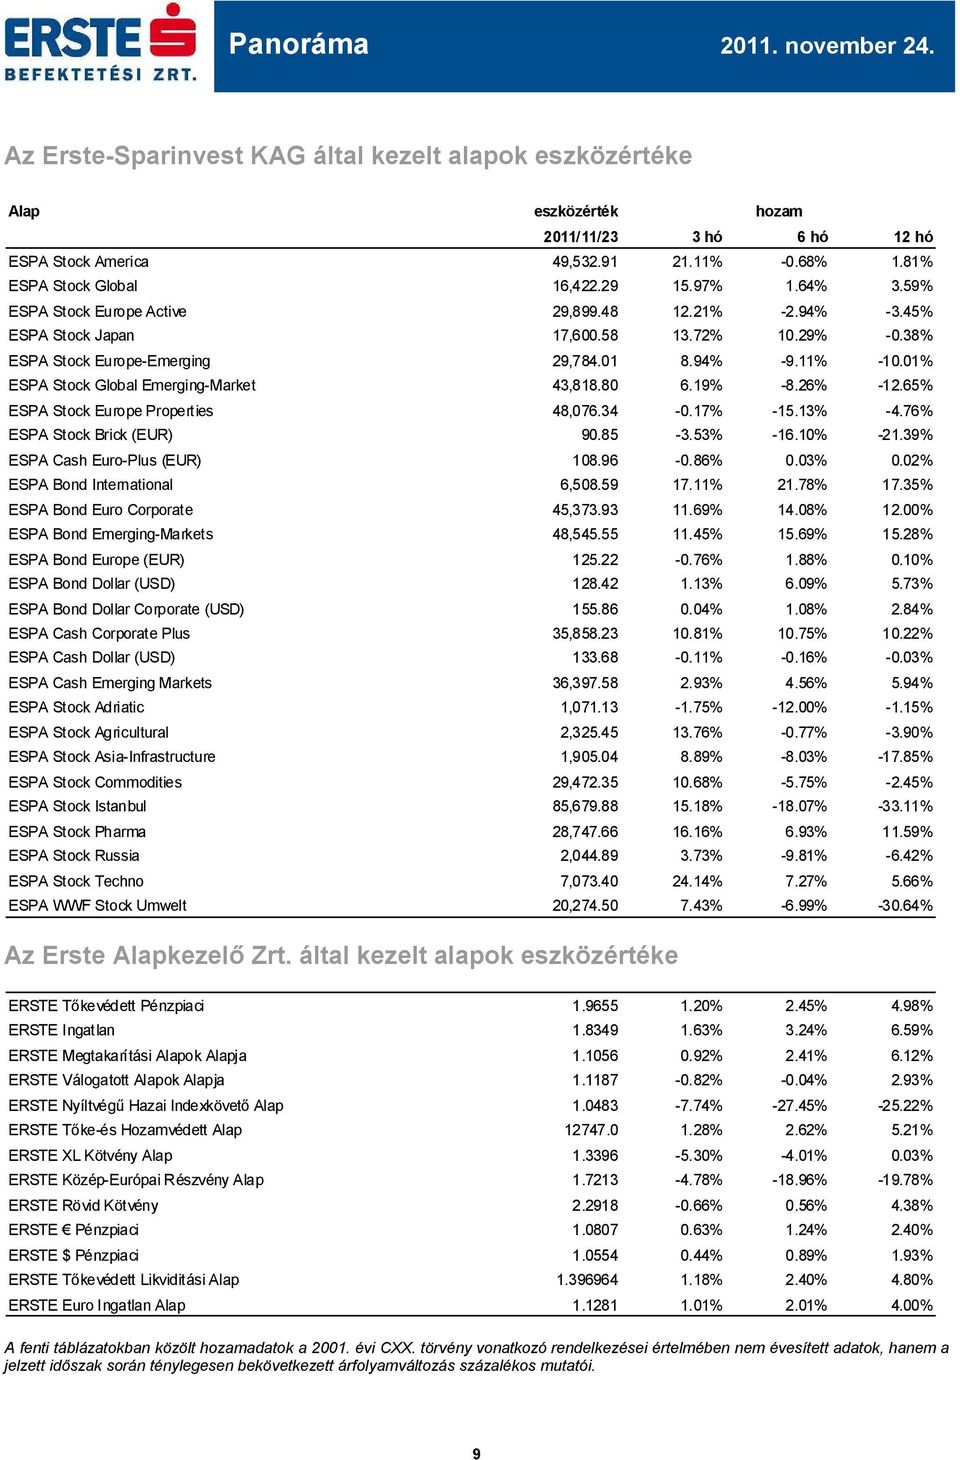 1% ESPA Stock Global Emerging-Market 43,818.8 6.19% -8.26% -12.65% ESPA Stock Europe Properties 48,76.34 -.17% -15.13% -4.76% ESPA Stock Brick (EUR) 9.85-3.53% -16.1% -21.